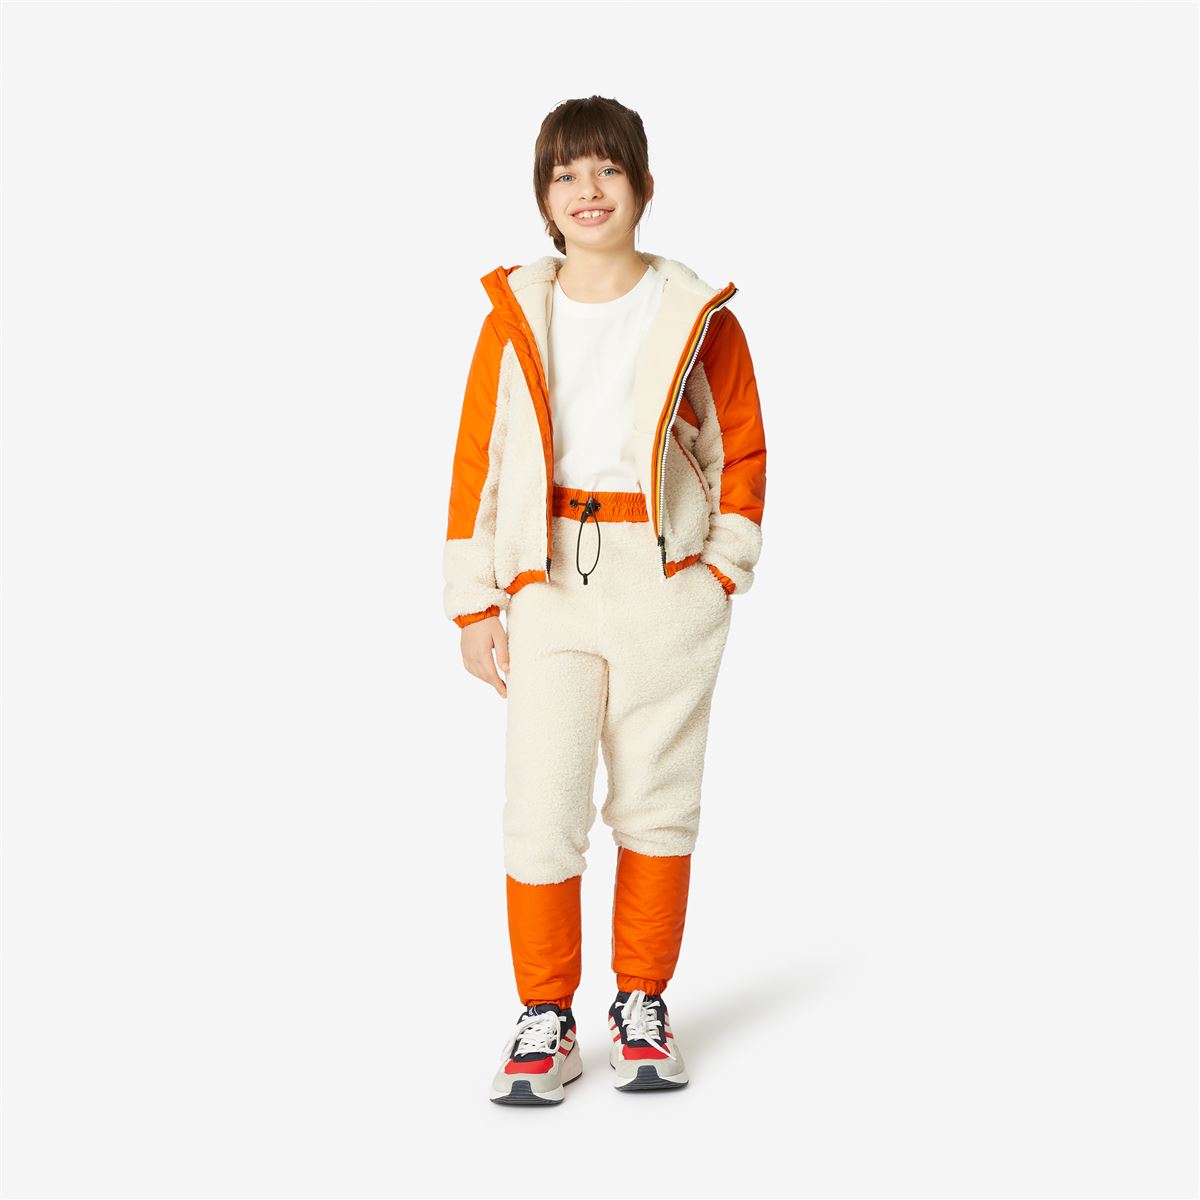 Kael Orsetto - Kids Lined Pants in Ecru - Orange Rust